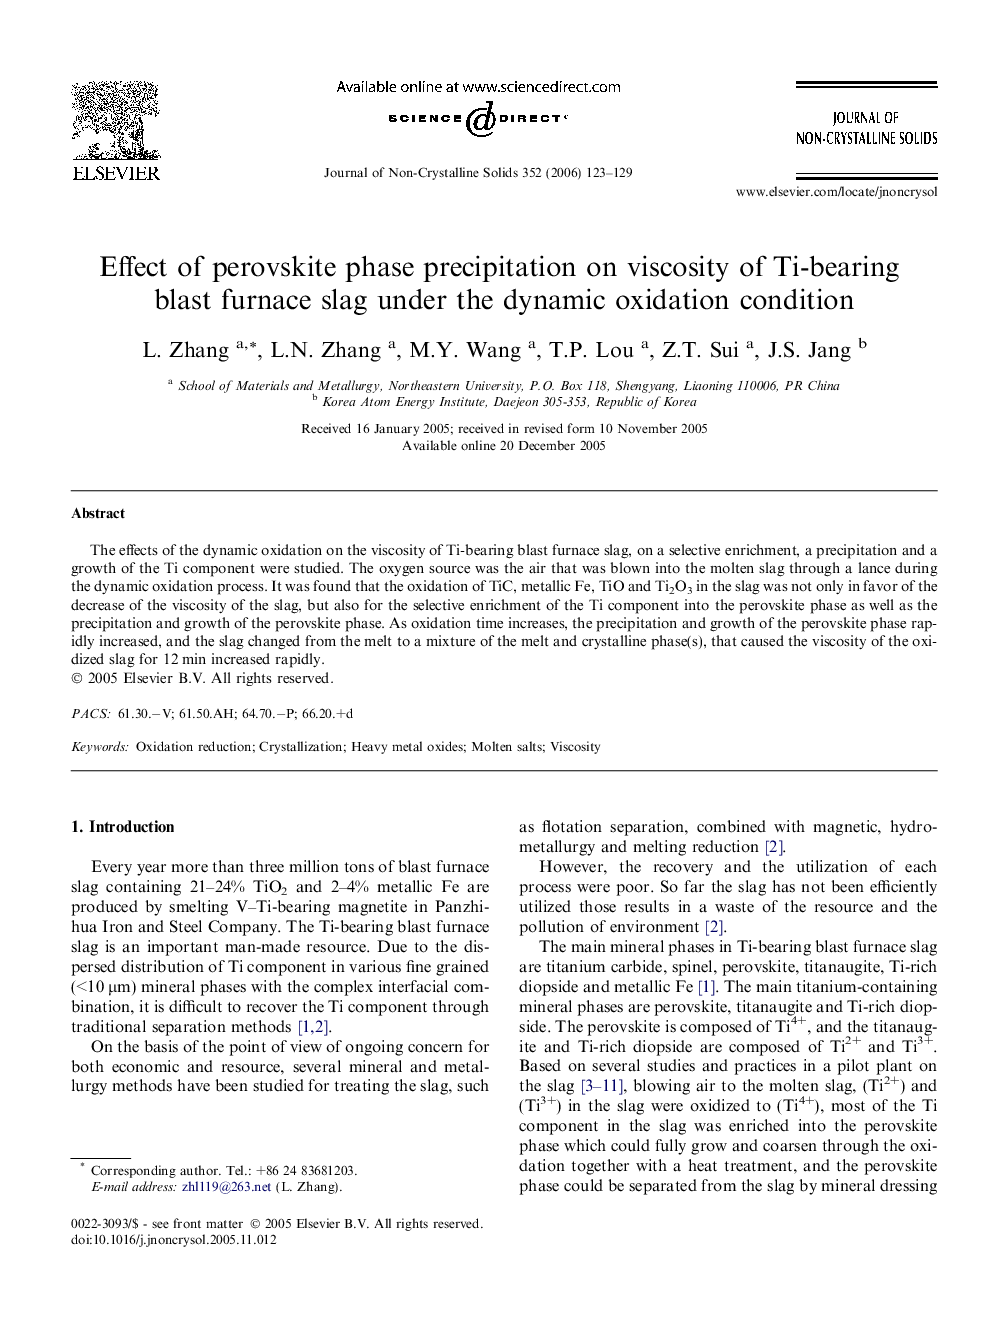 Effect of perovskite phase precipitation on viscosity of Ti-bearing blast furnace slag under the dynamic oxidation condition